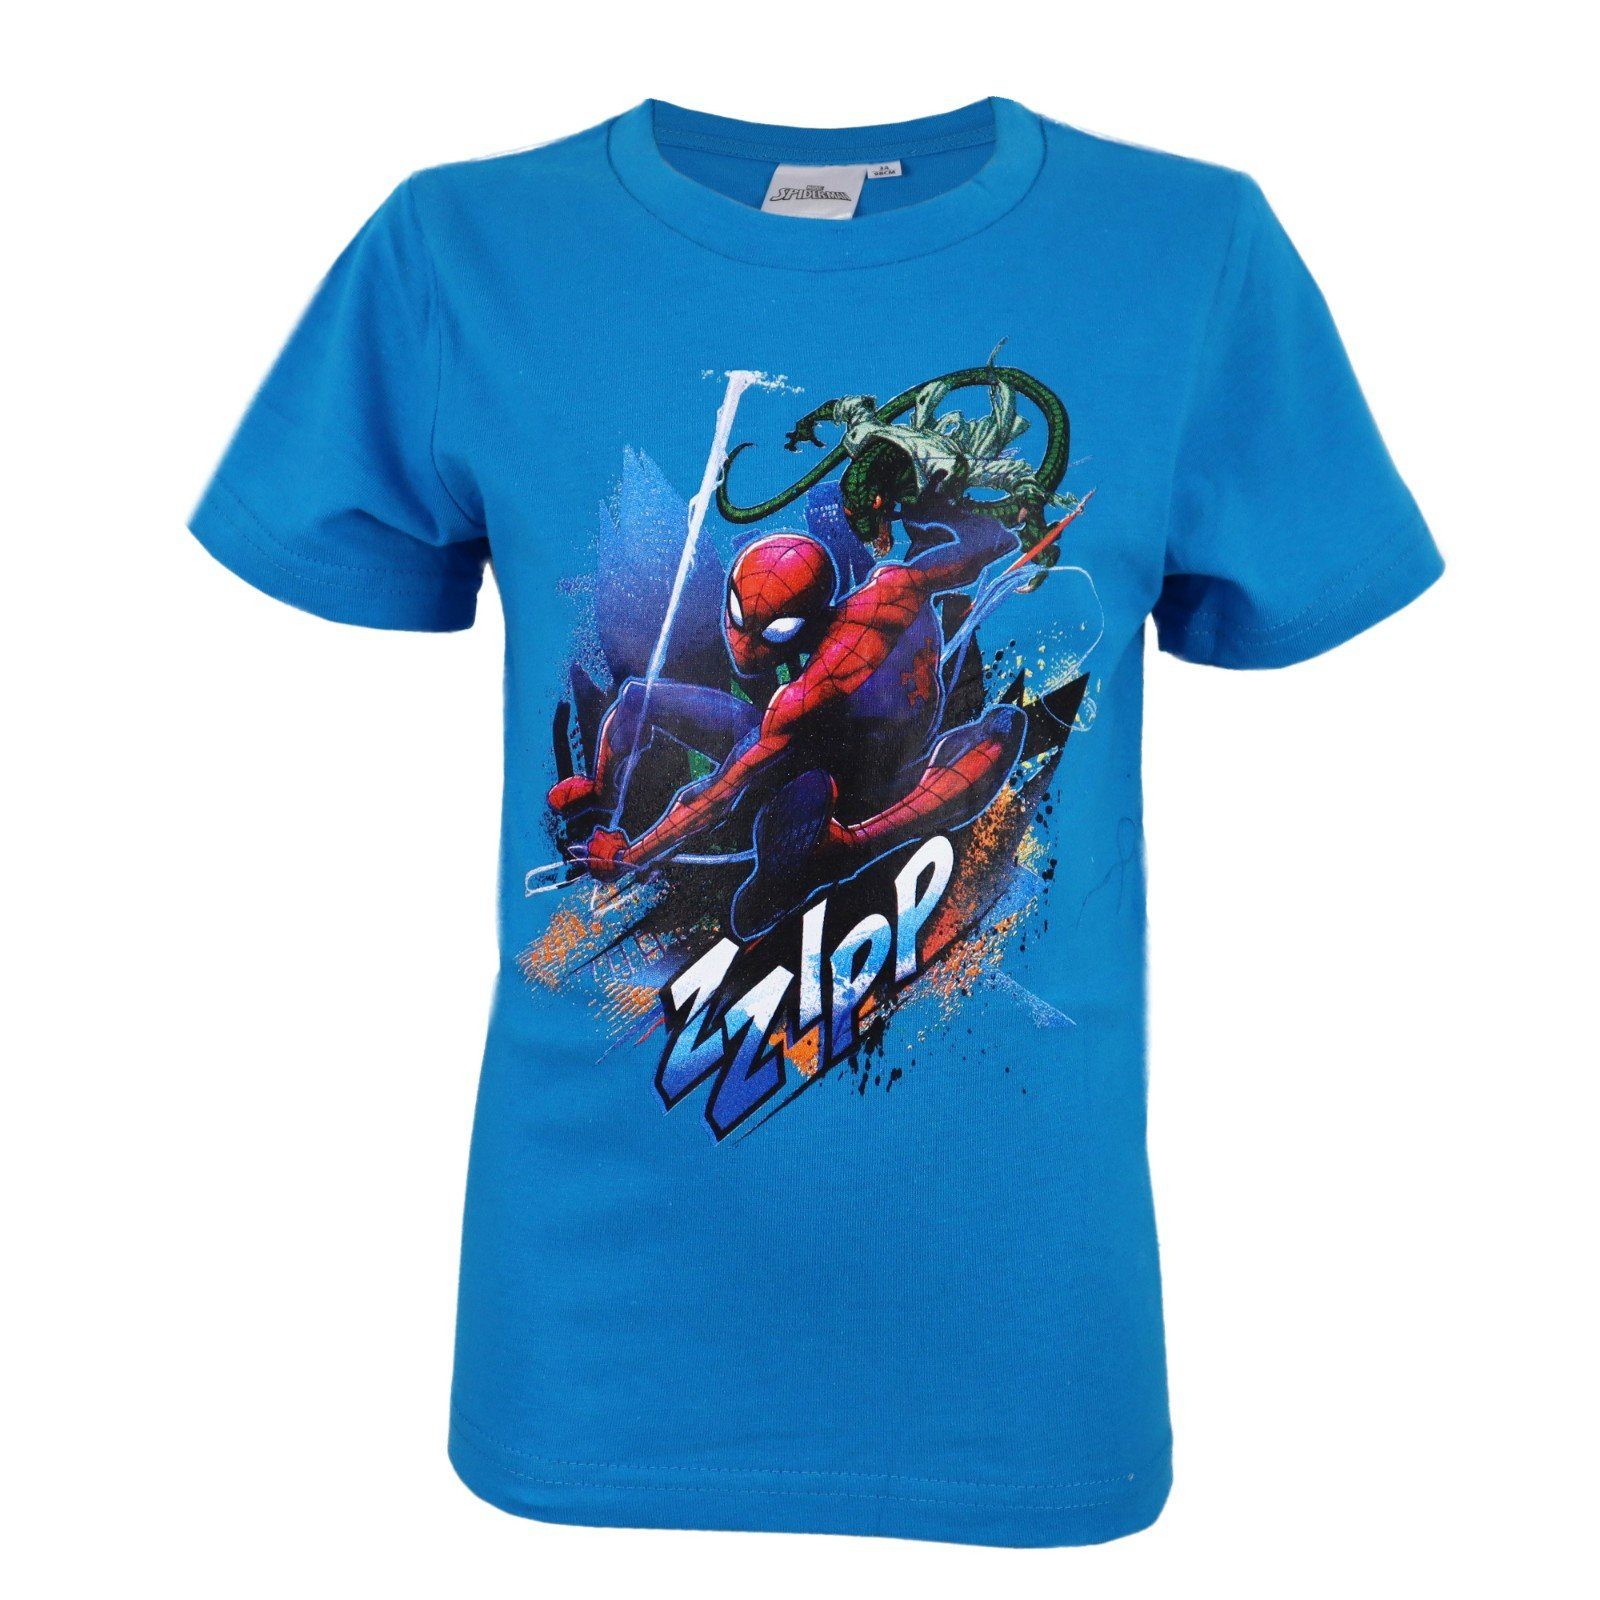 Marvel MARVEL Hellblau 98 Kinder Lizard Gr. Shirt Baumwolle 128, bis 100% Spiderman T-Shirt